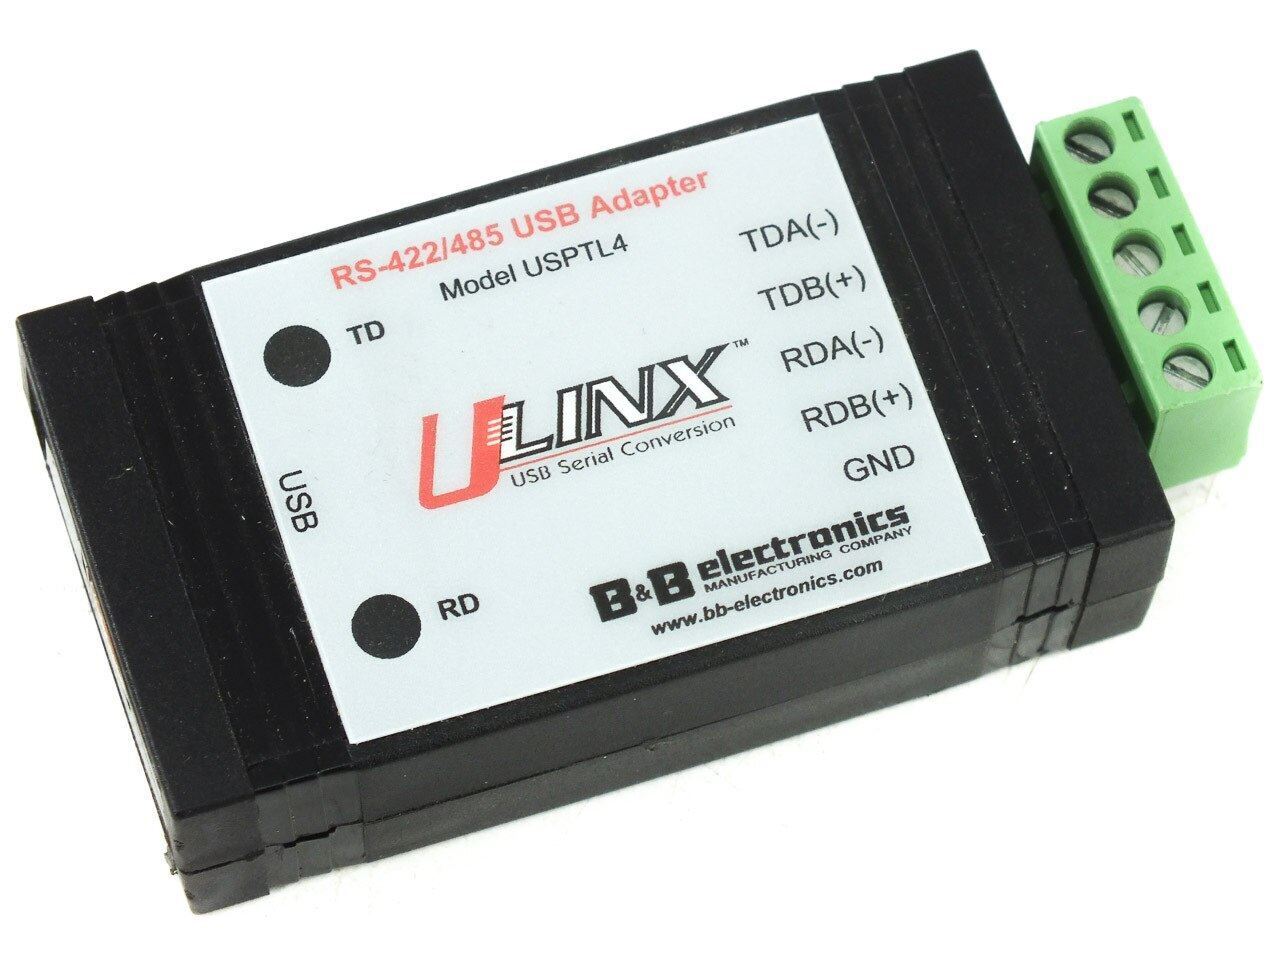 B&B Electronics USPTL4 Serial Converter USB 2.0 to RS-422/485 TB